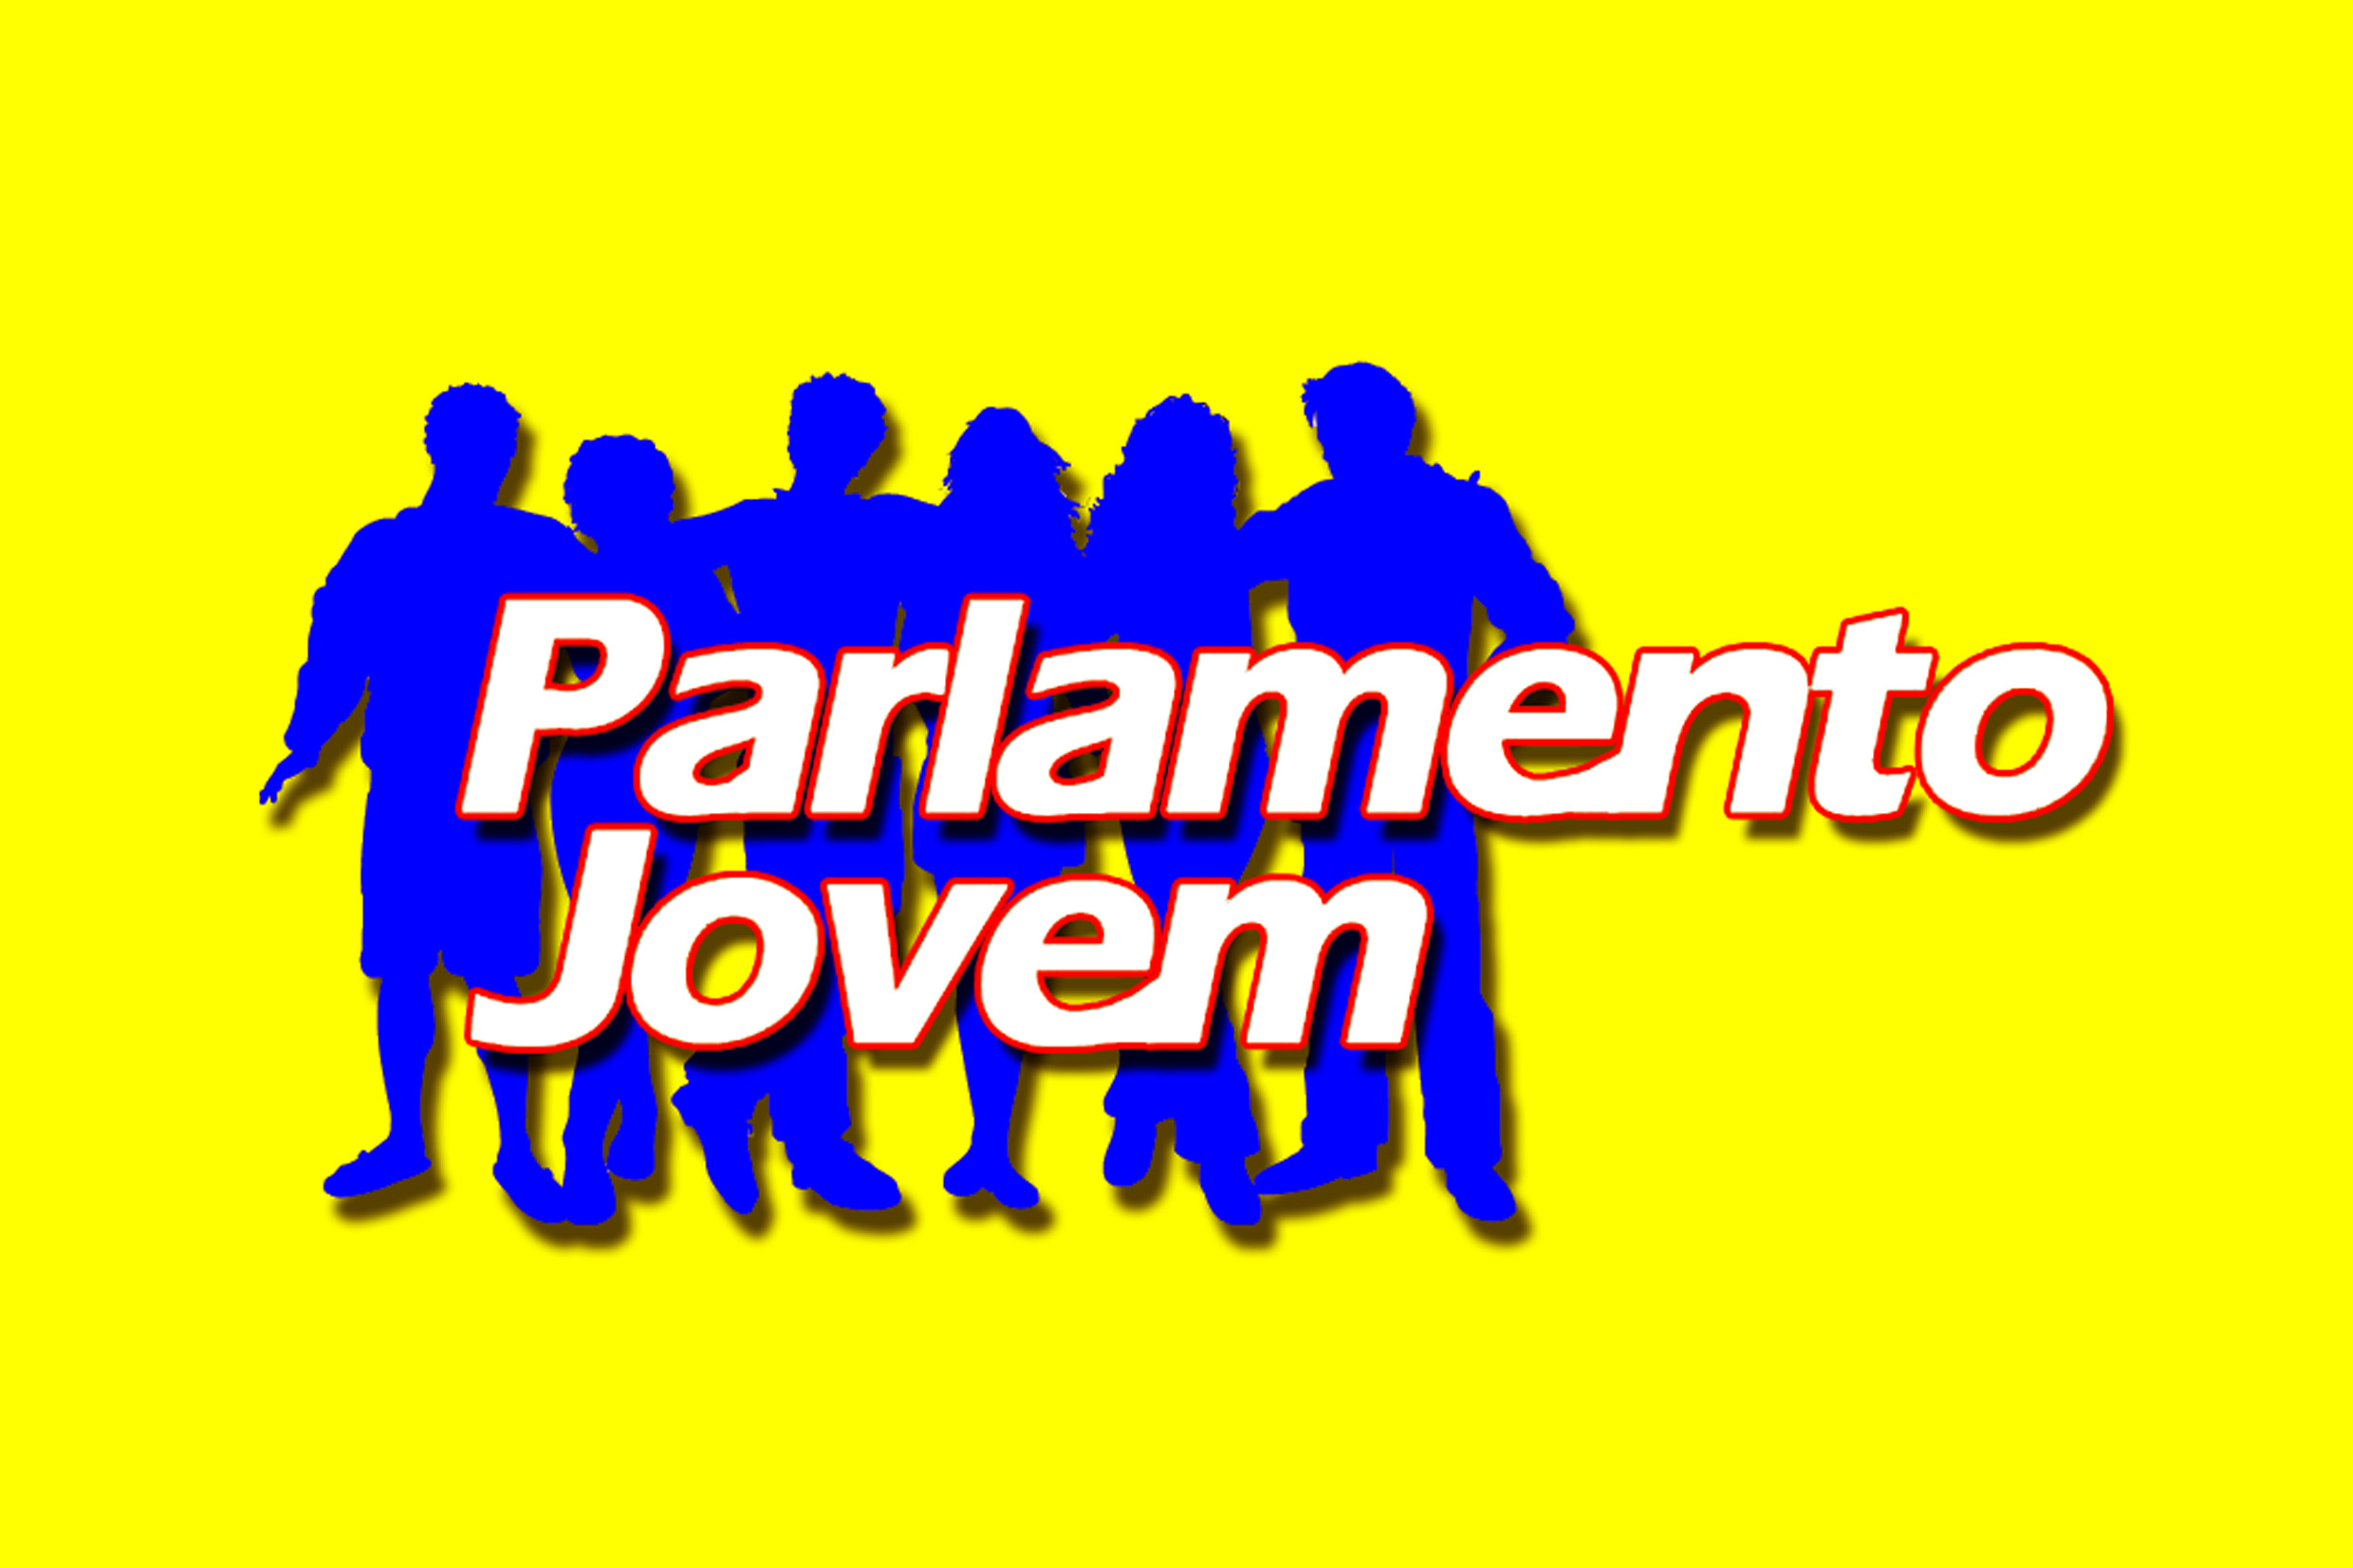 Parlamento Jovem <a style='float:right;color:#ccc' href='https://www3.al.sp.gov.br/repositorio/noticia/N-12-2016/fg198009.jpg' target=_blank><i class='bi bi-zoom-in'></i> Clique para ver a imagem </a>